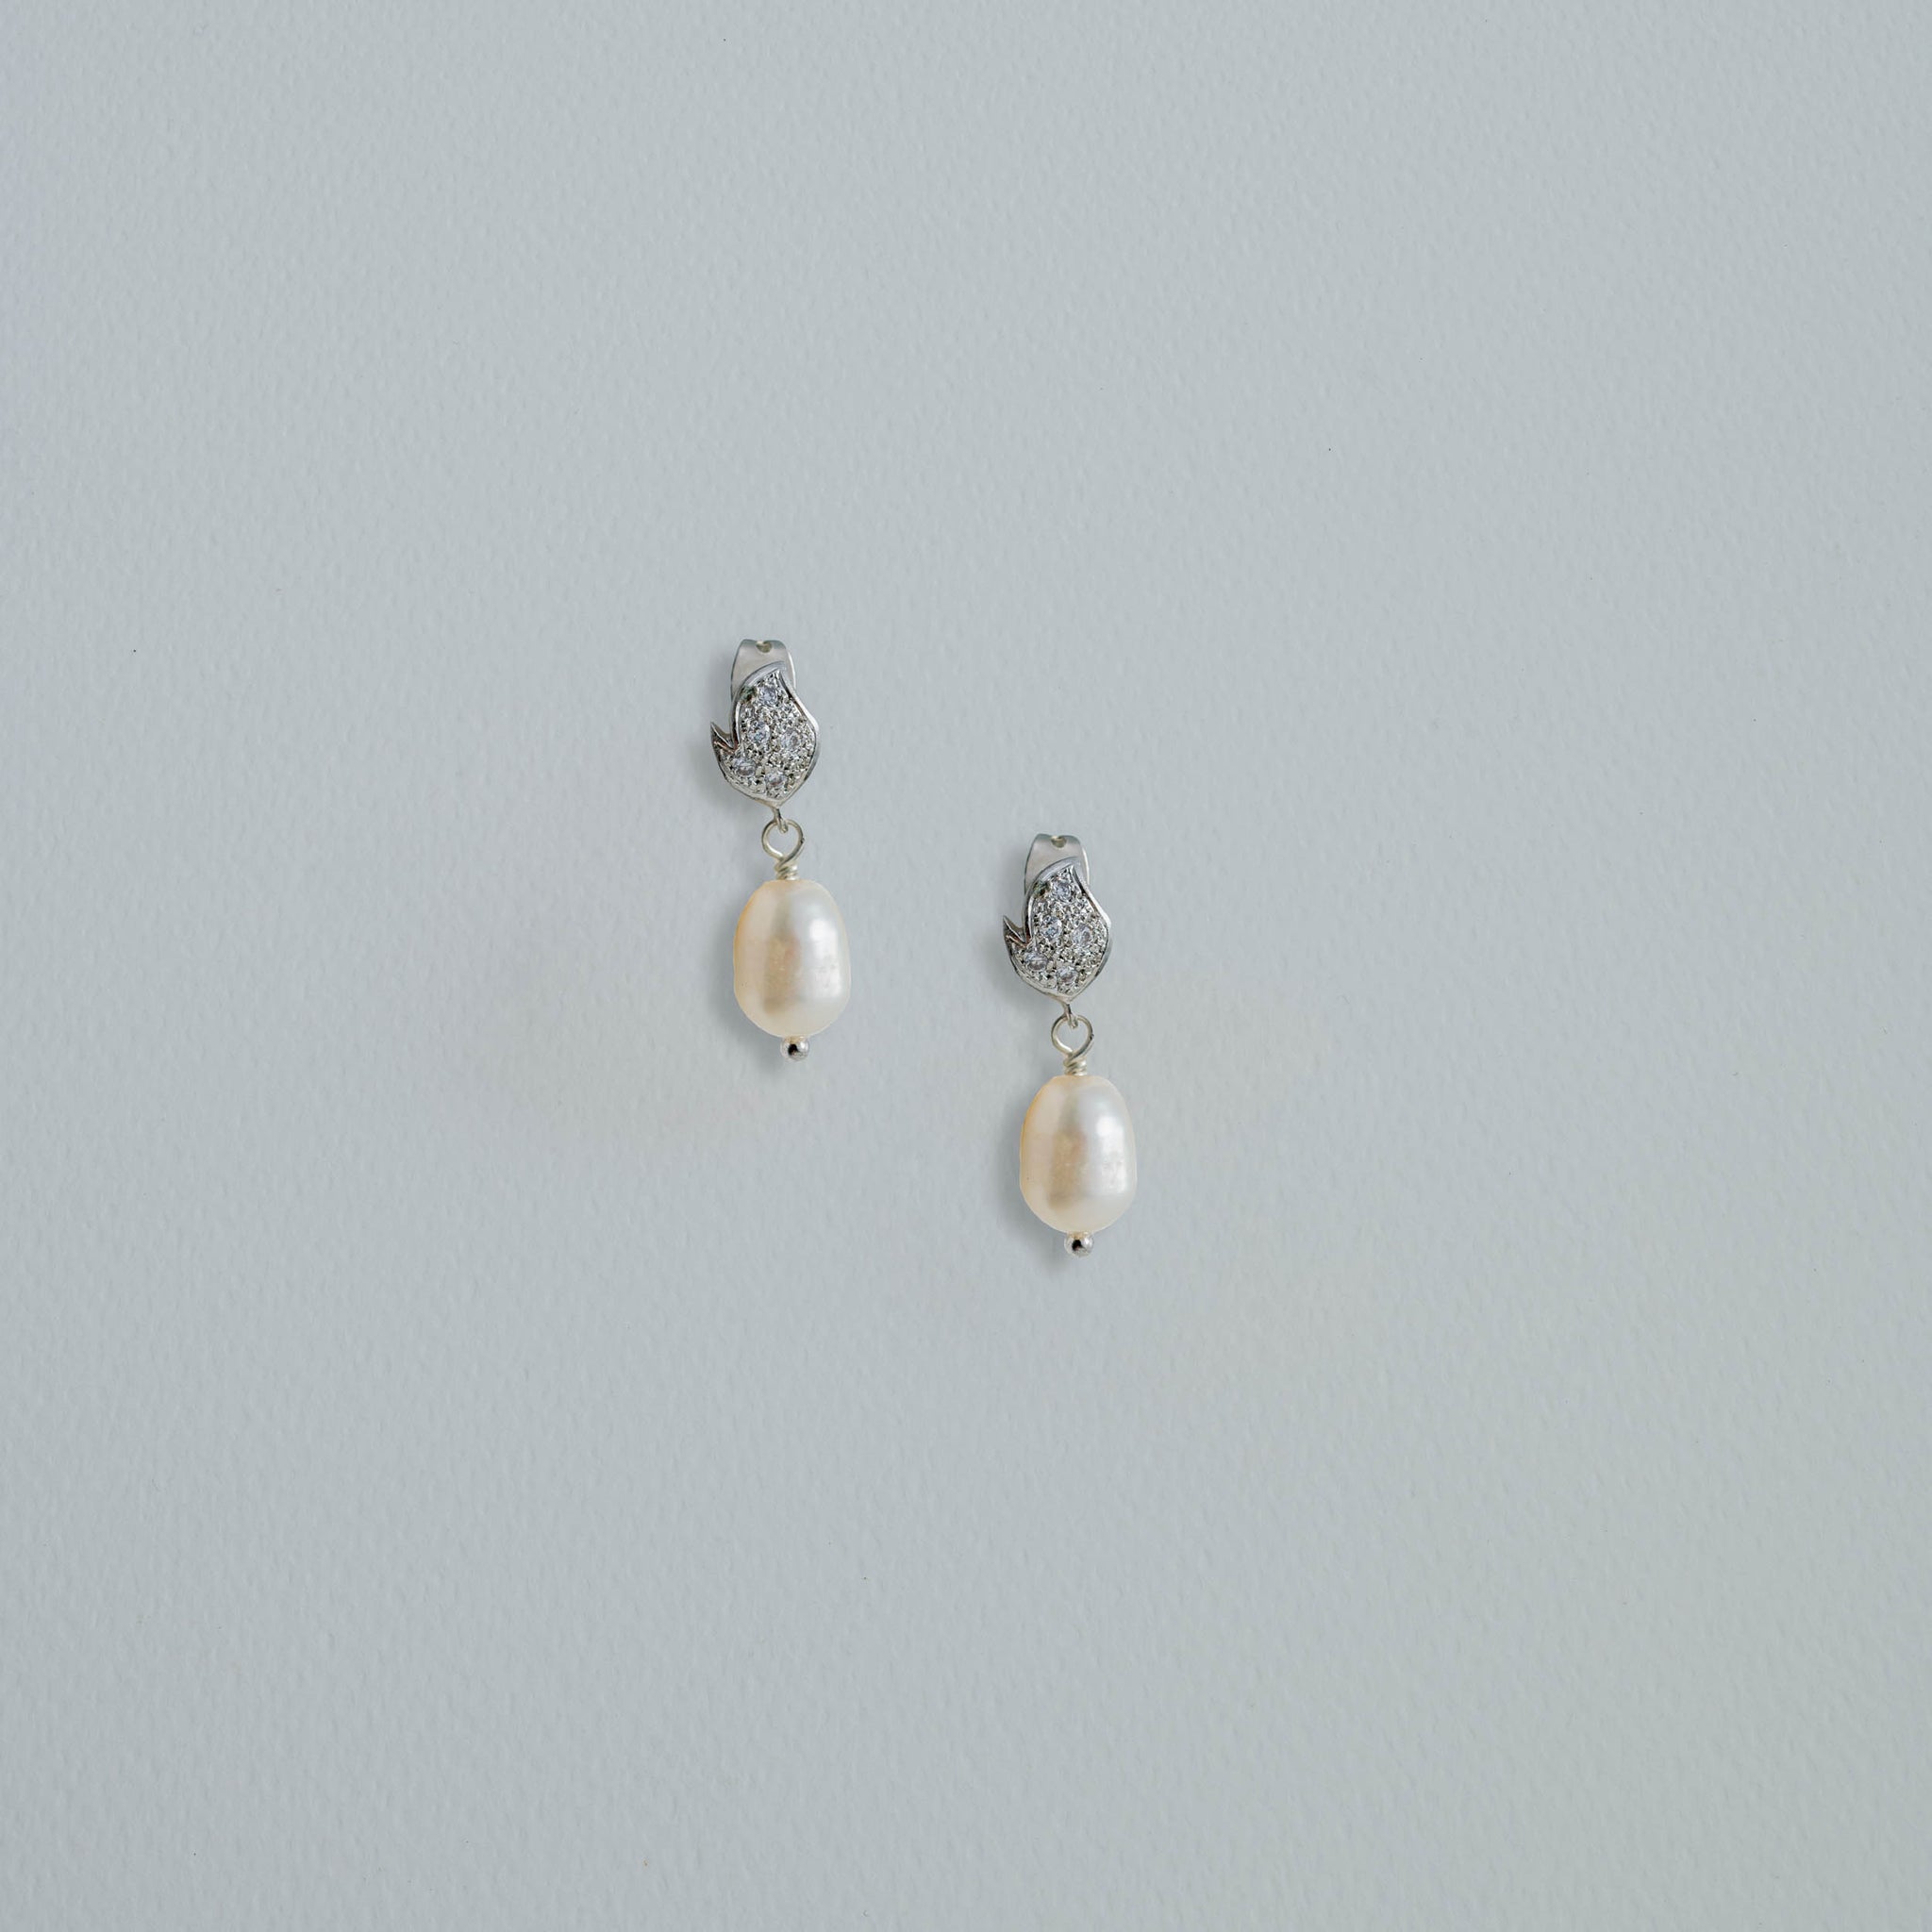 Tranquil Pearl Earrings